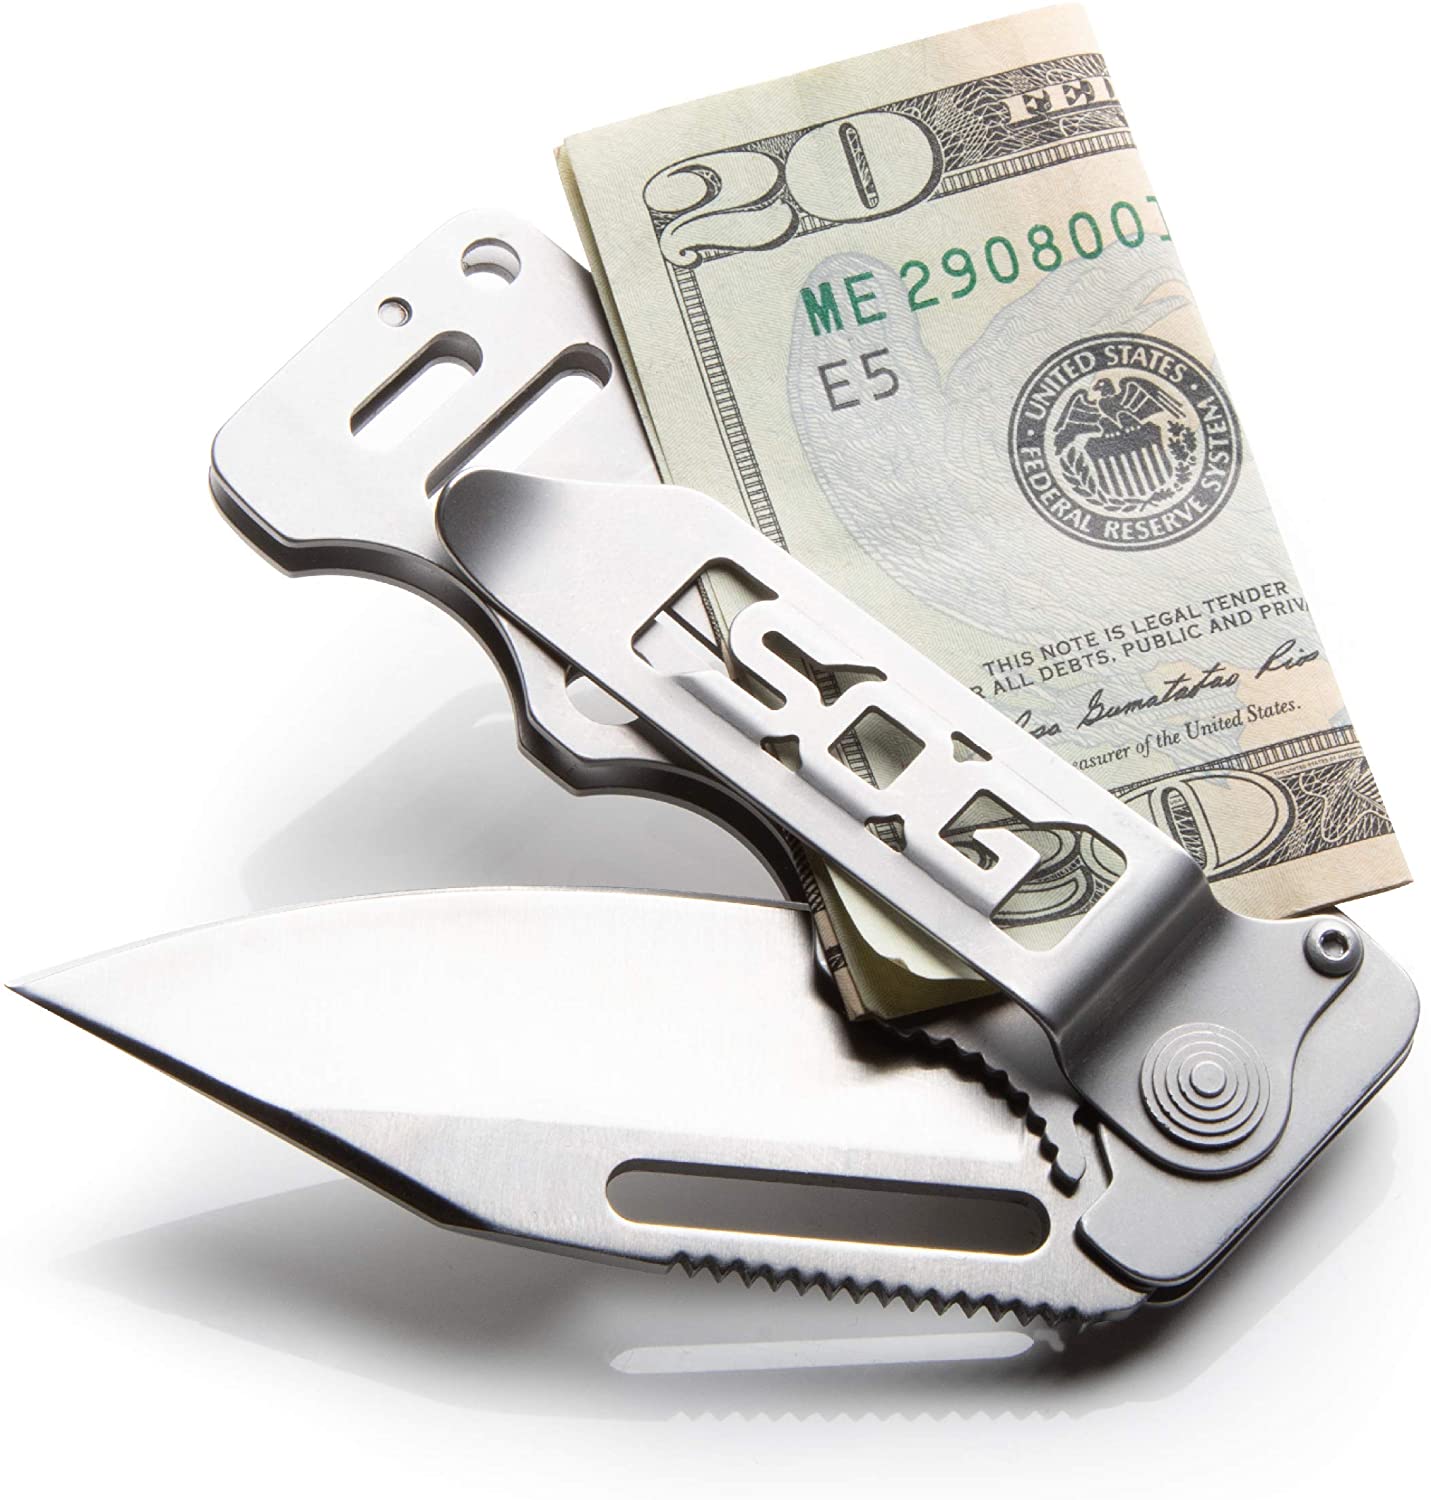 https://www.themodestman.com/wp-content/uploads/2020/11/SOG-Money-Clip-Pocket-Knife.jpg